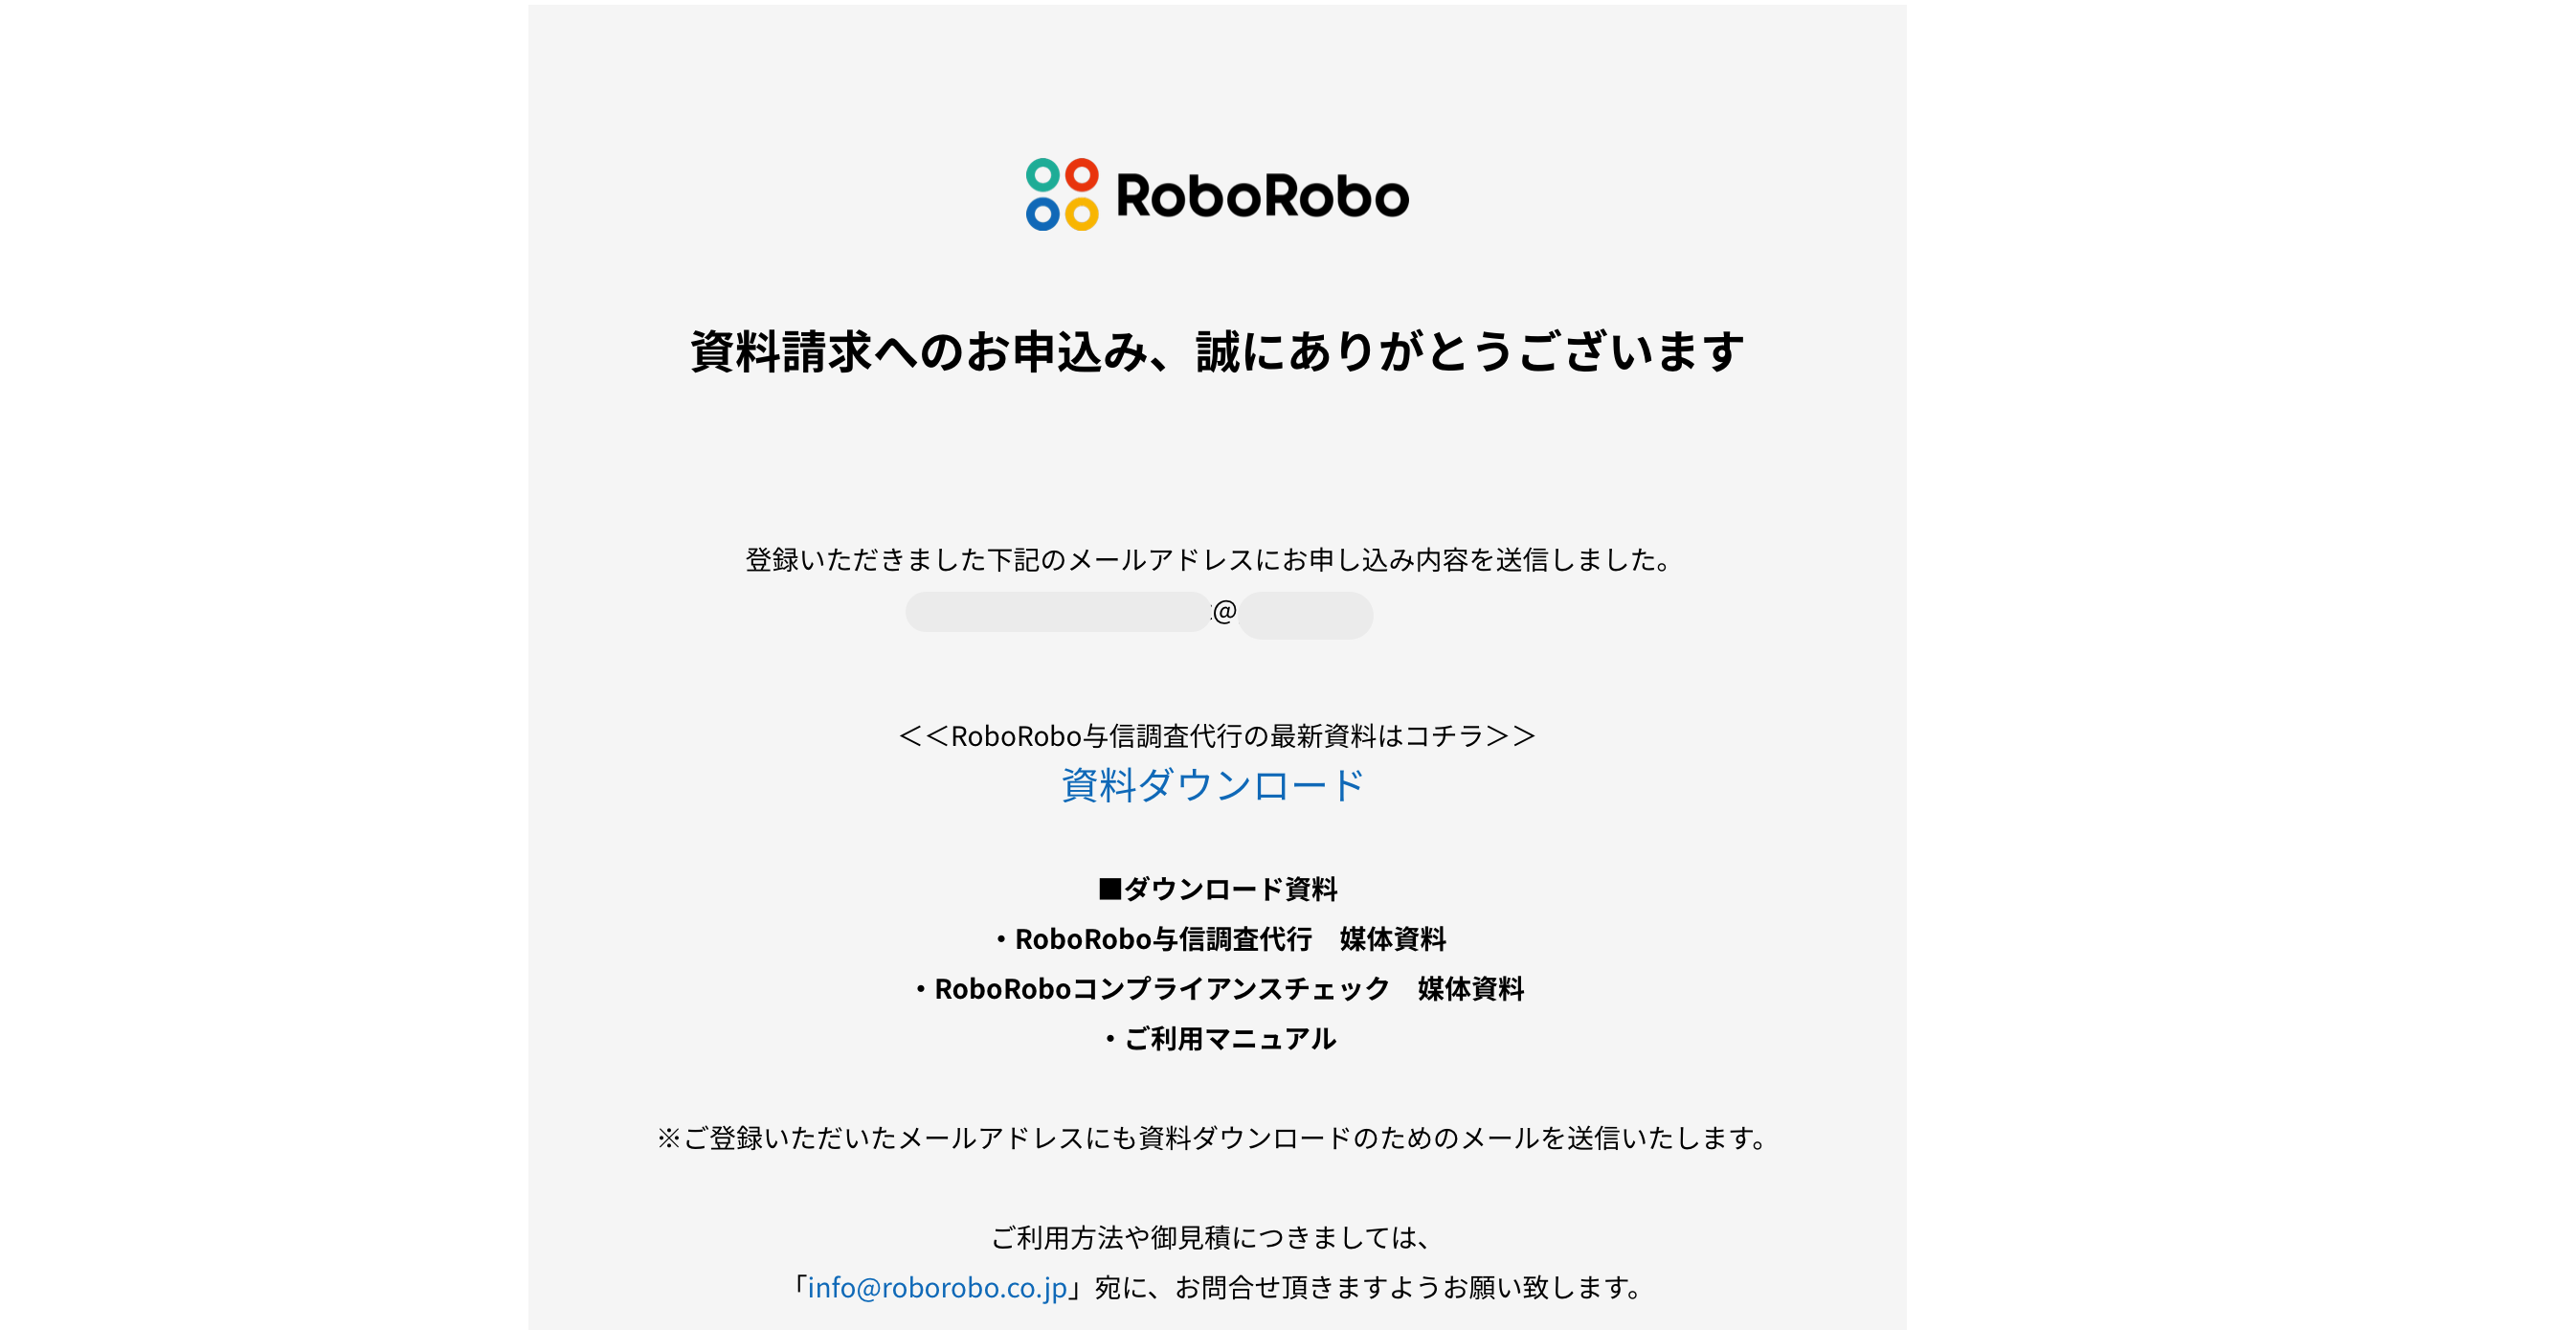 roborobo与信調査代行の無料資料請求の申し込み方法_申込み完了画面を確認する